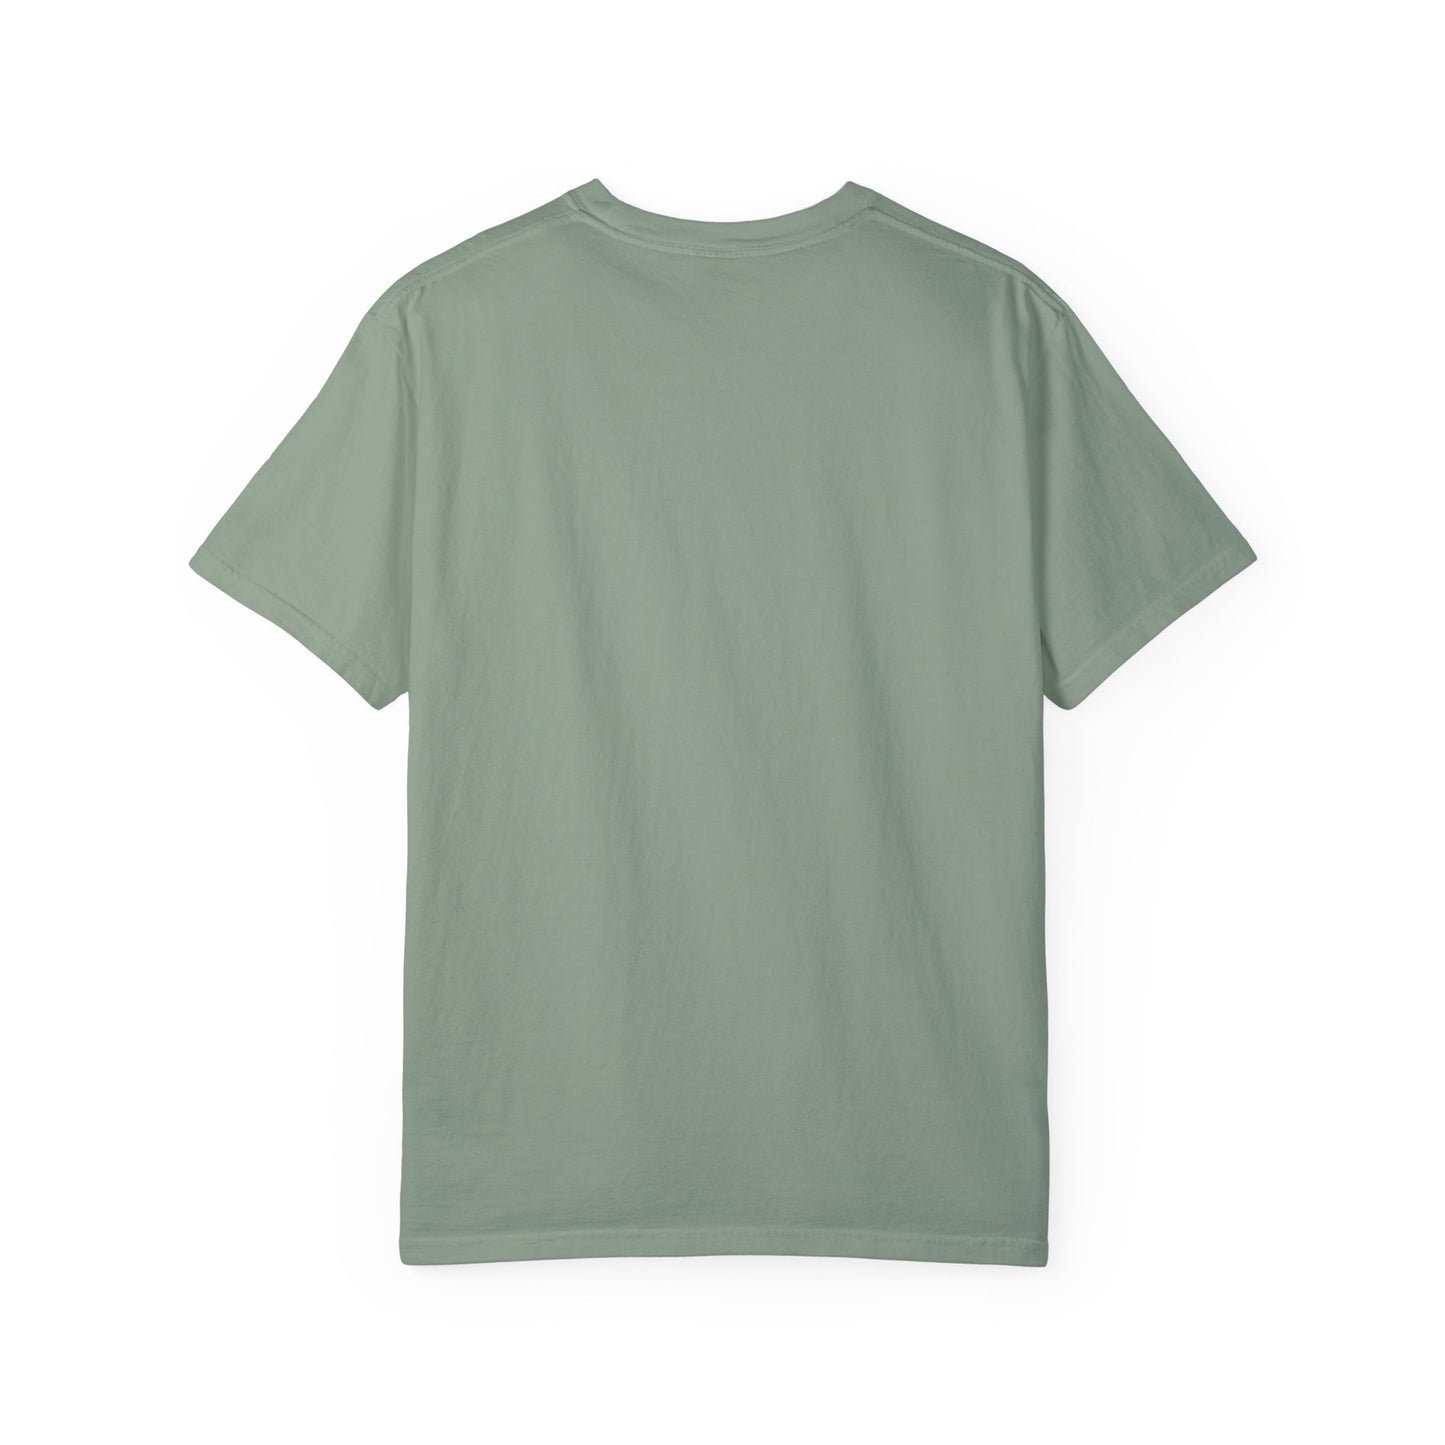 Pair of Cherry Pies Unisex Garment-Dyed T-shirt